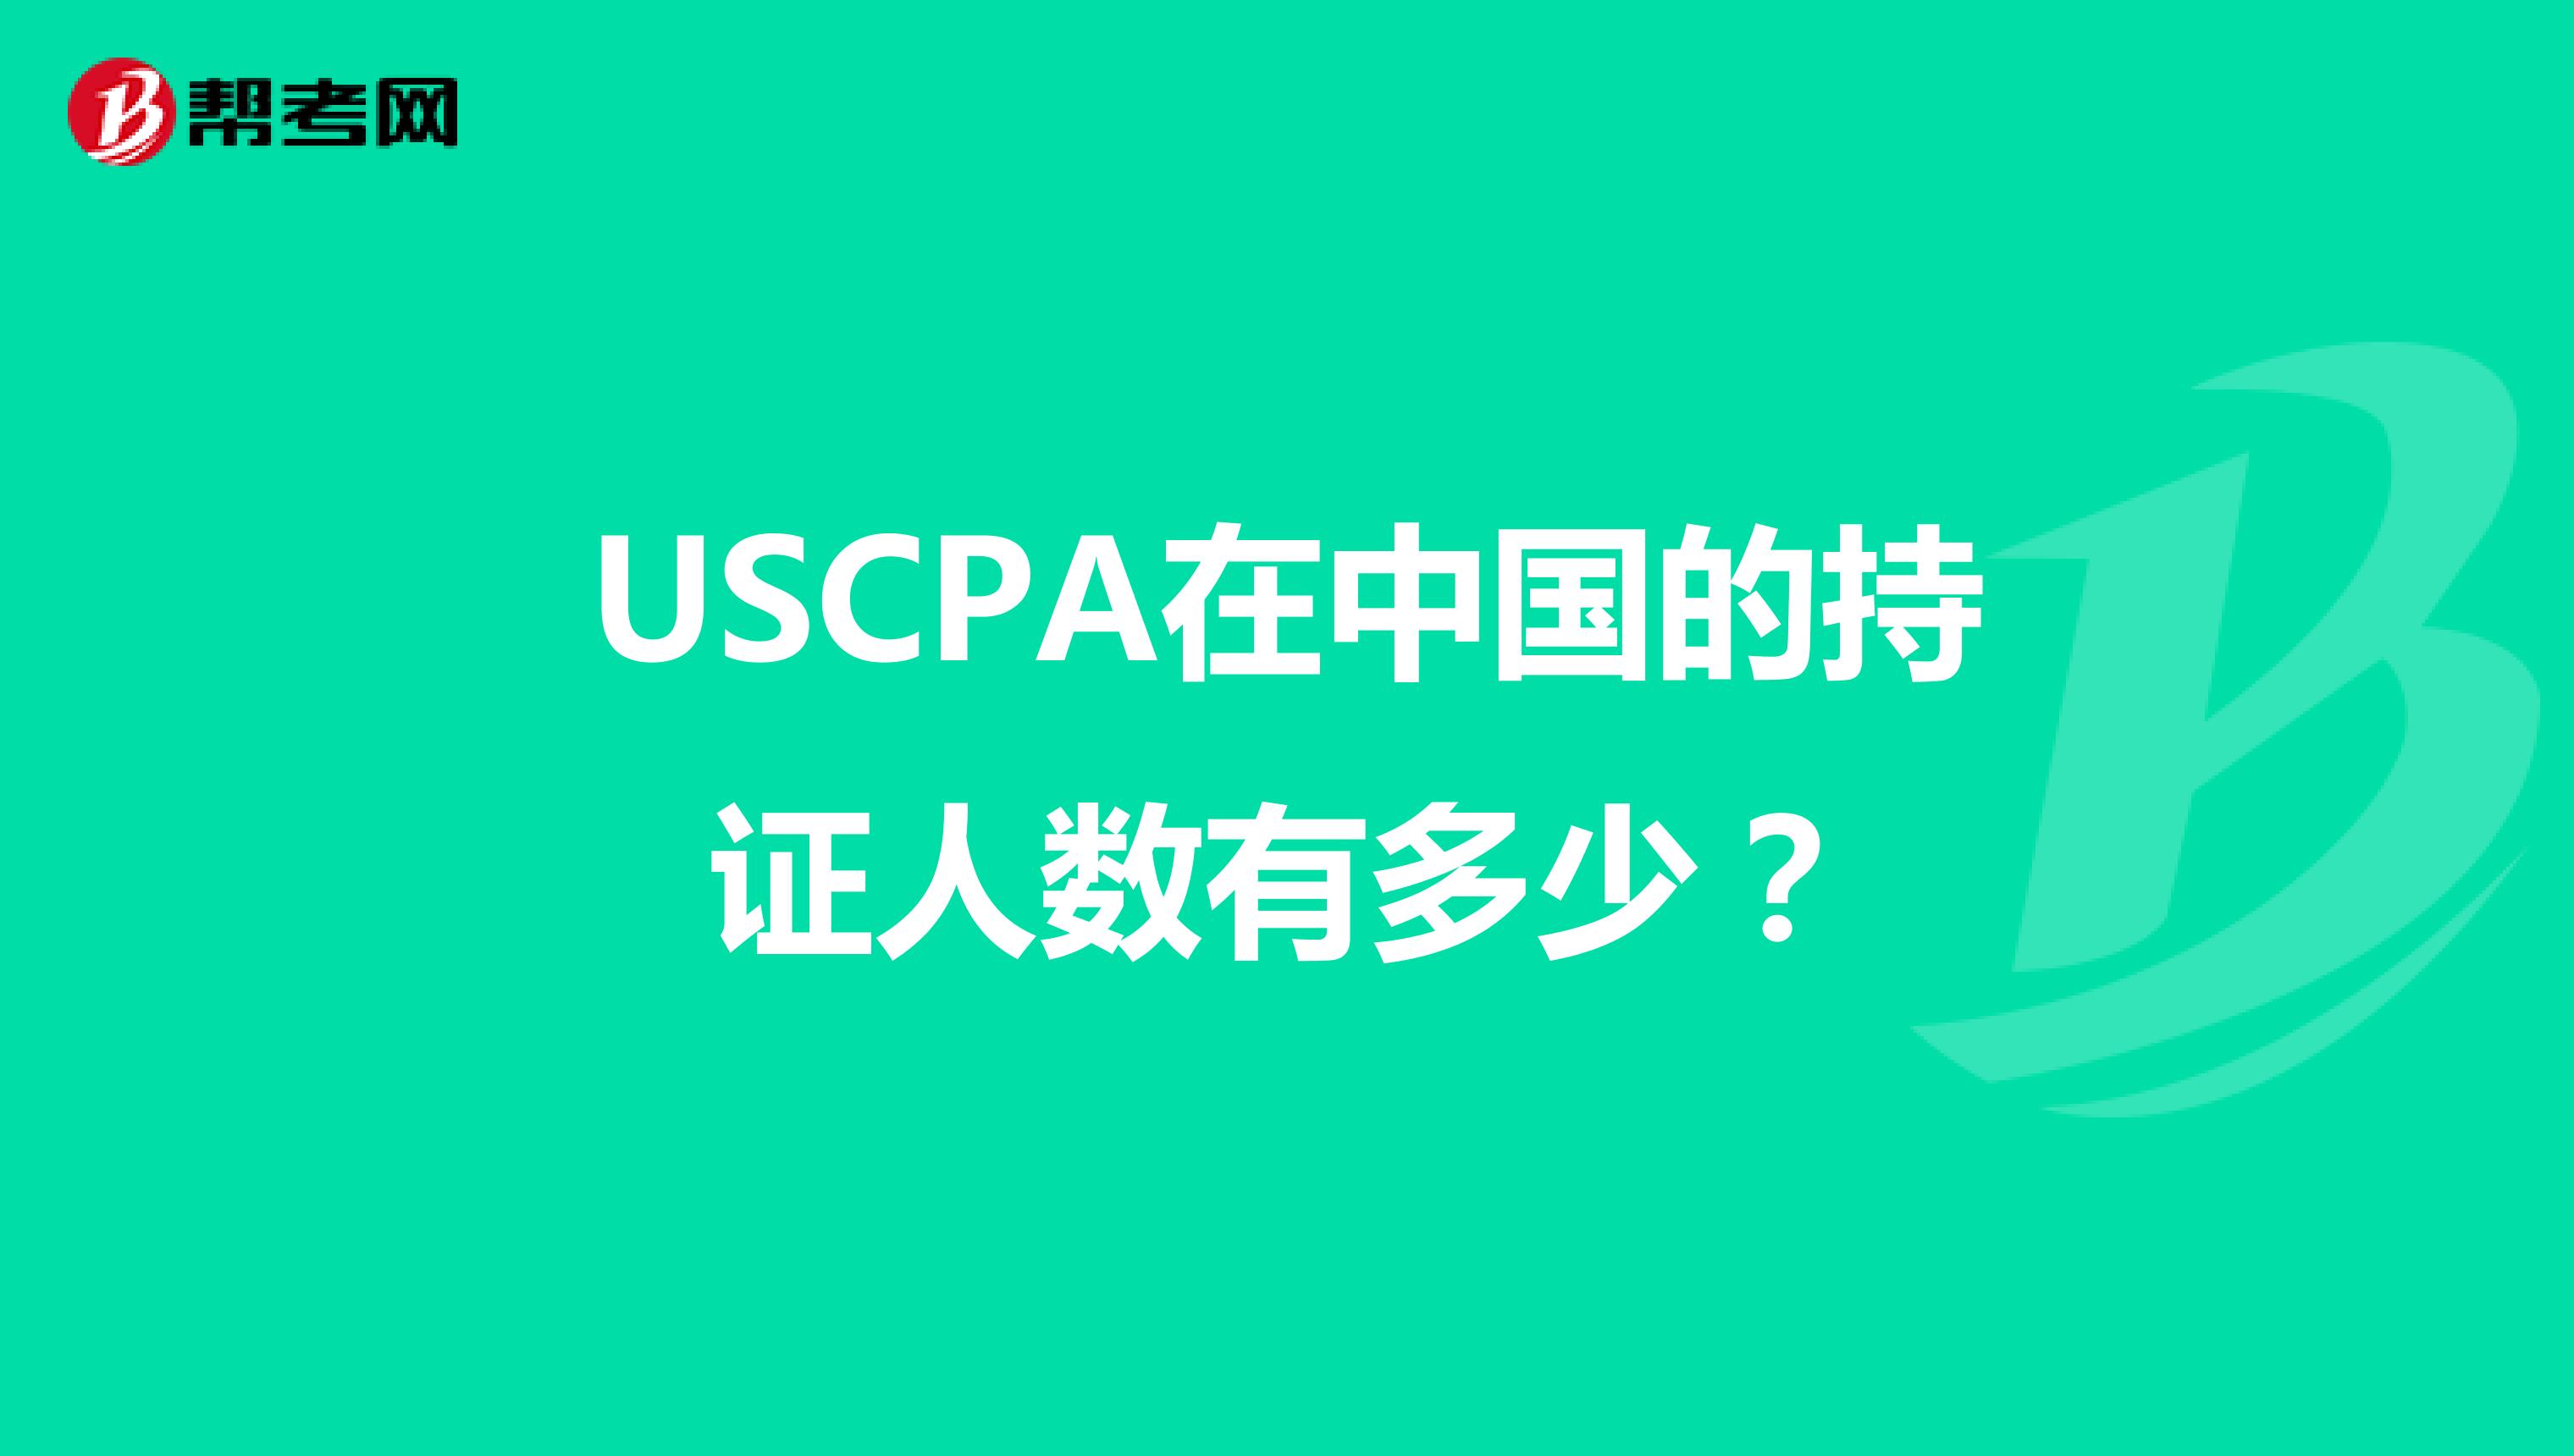 USCPA在中国的持证人数有多少？